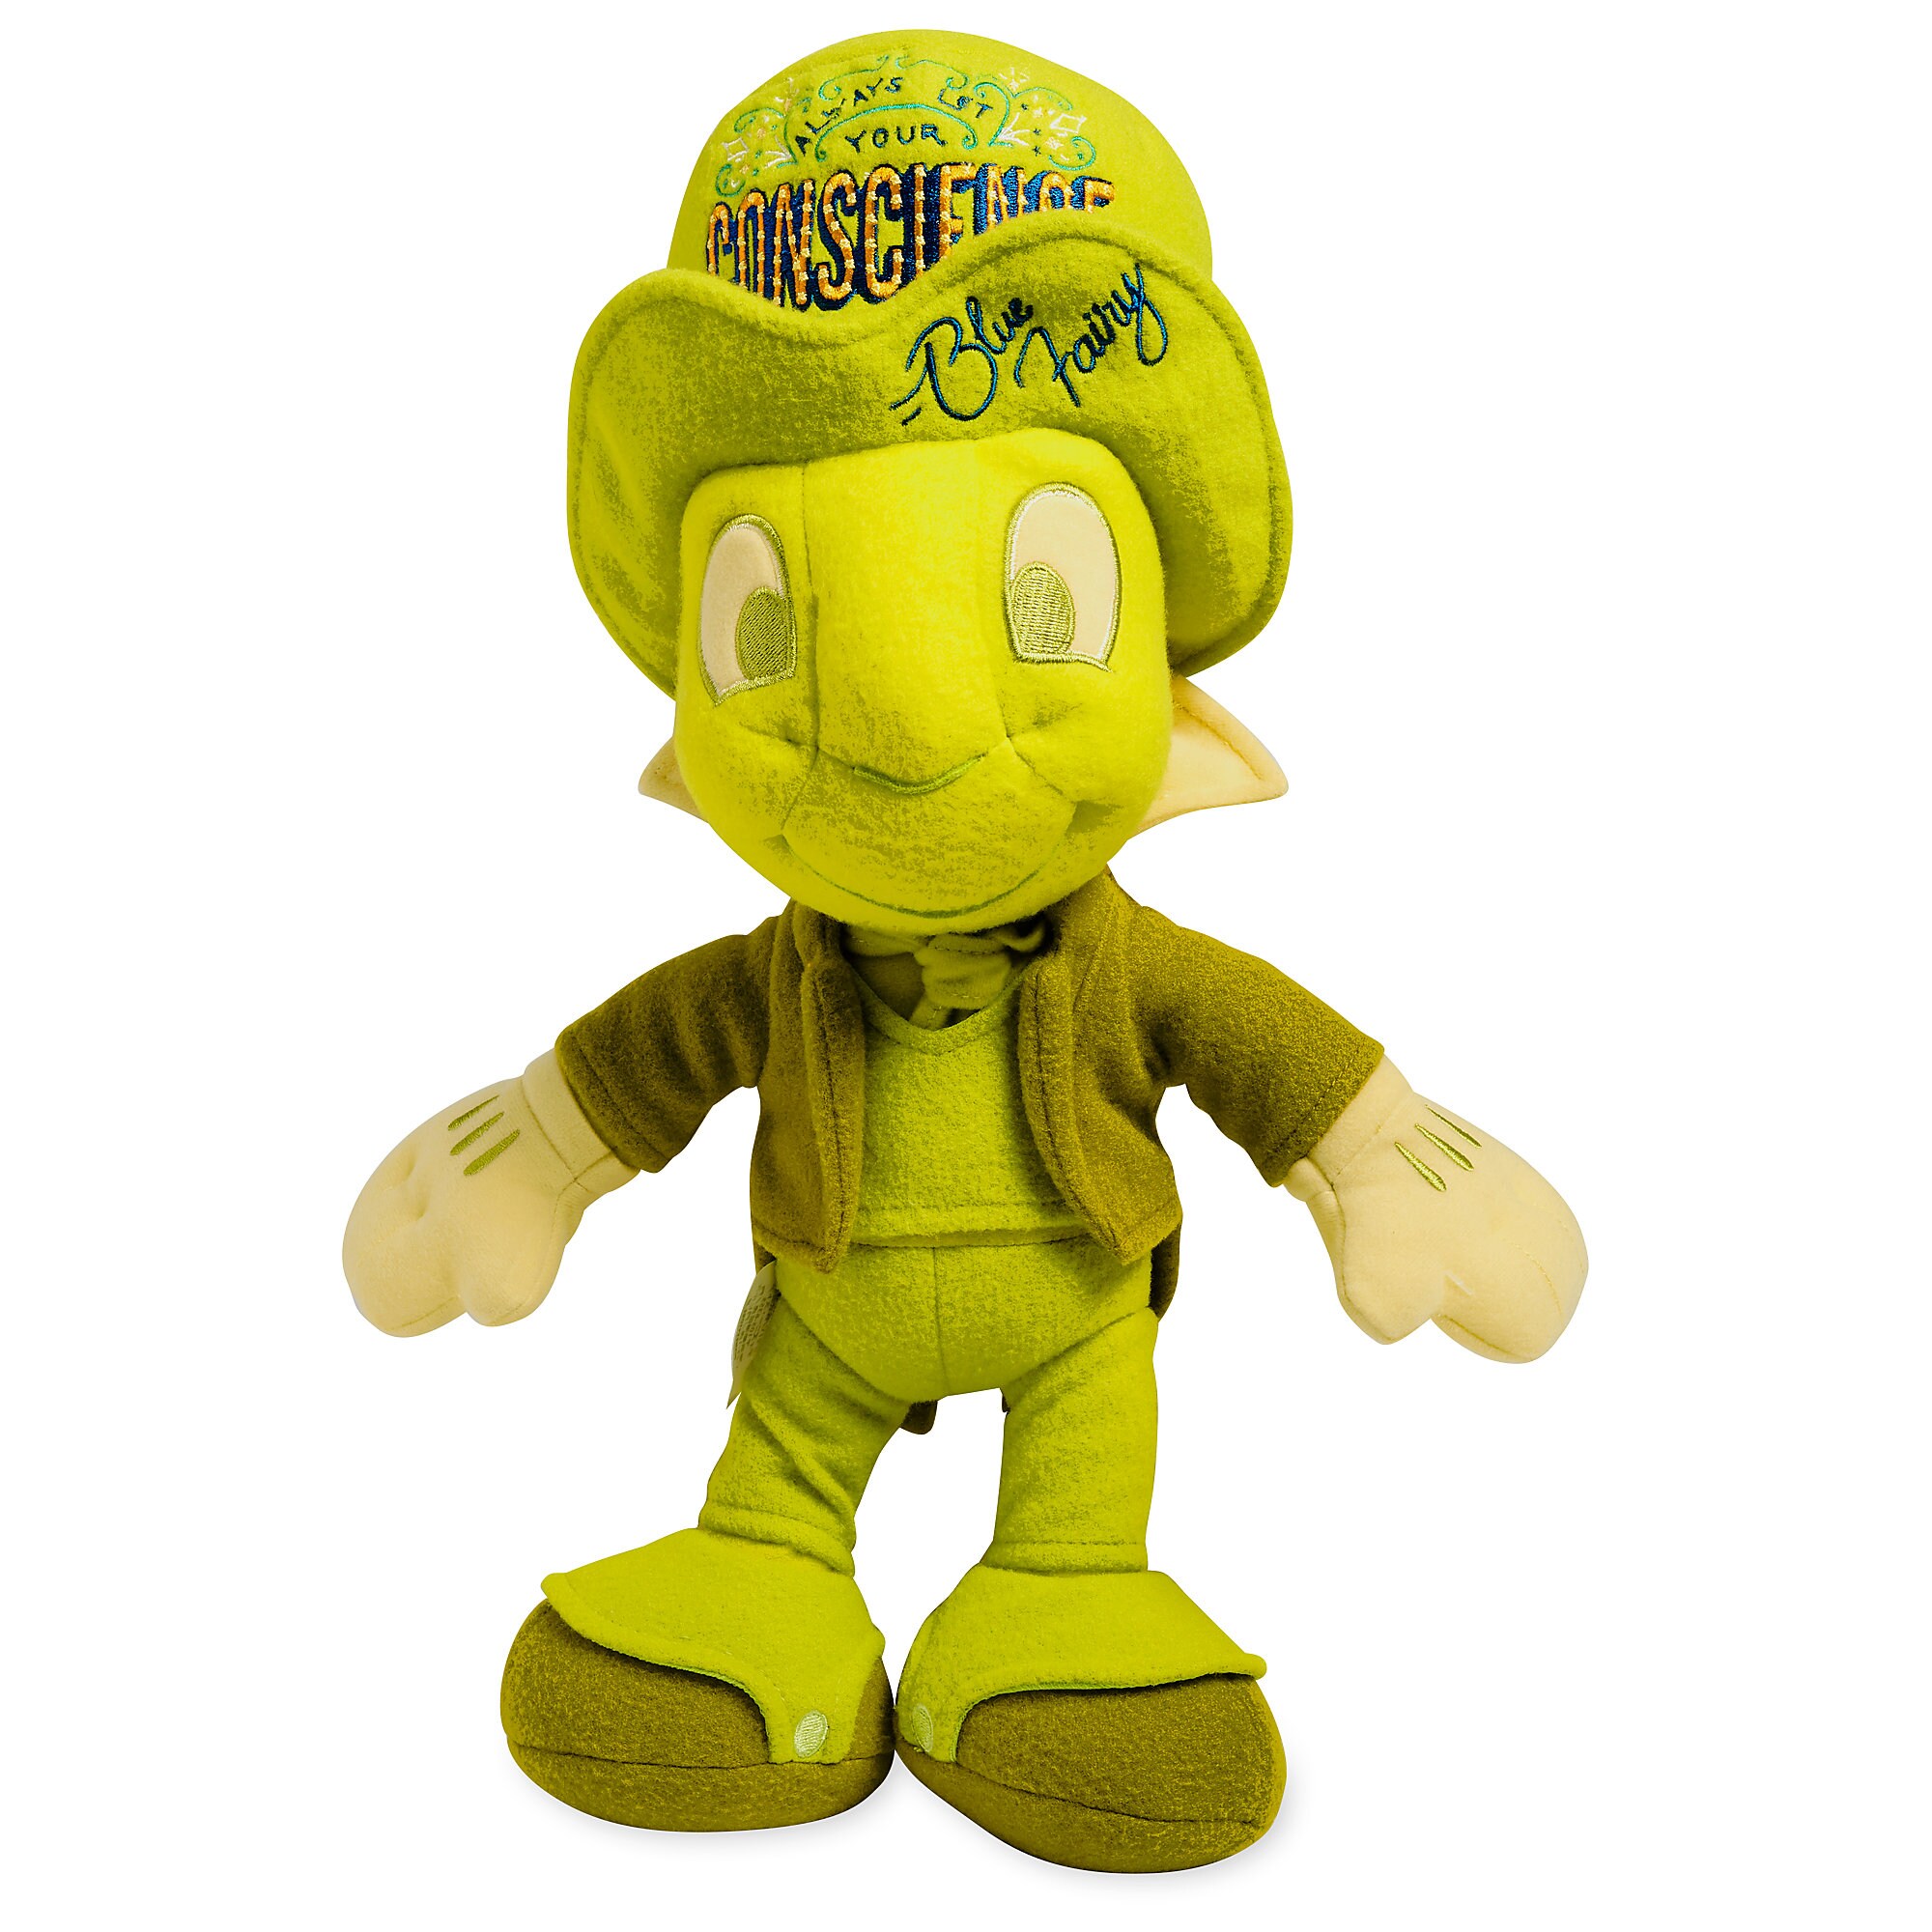 Disney Wisdom Plush - Jiminy Cricket - Pinocchio - July - Limited Release